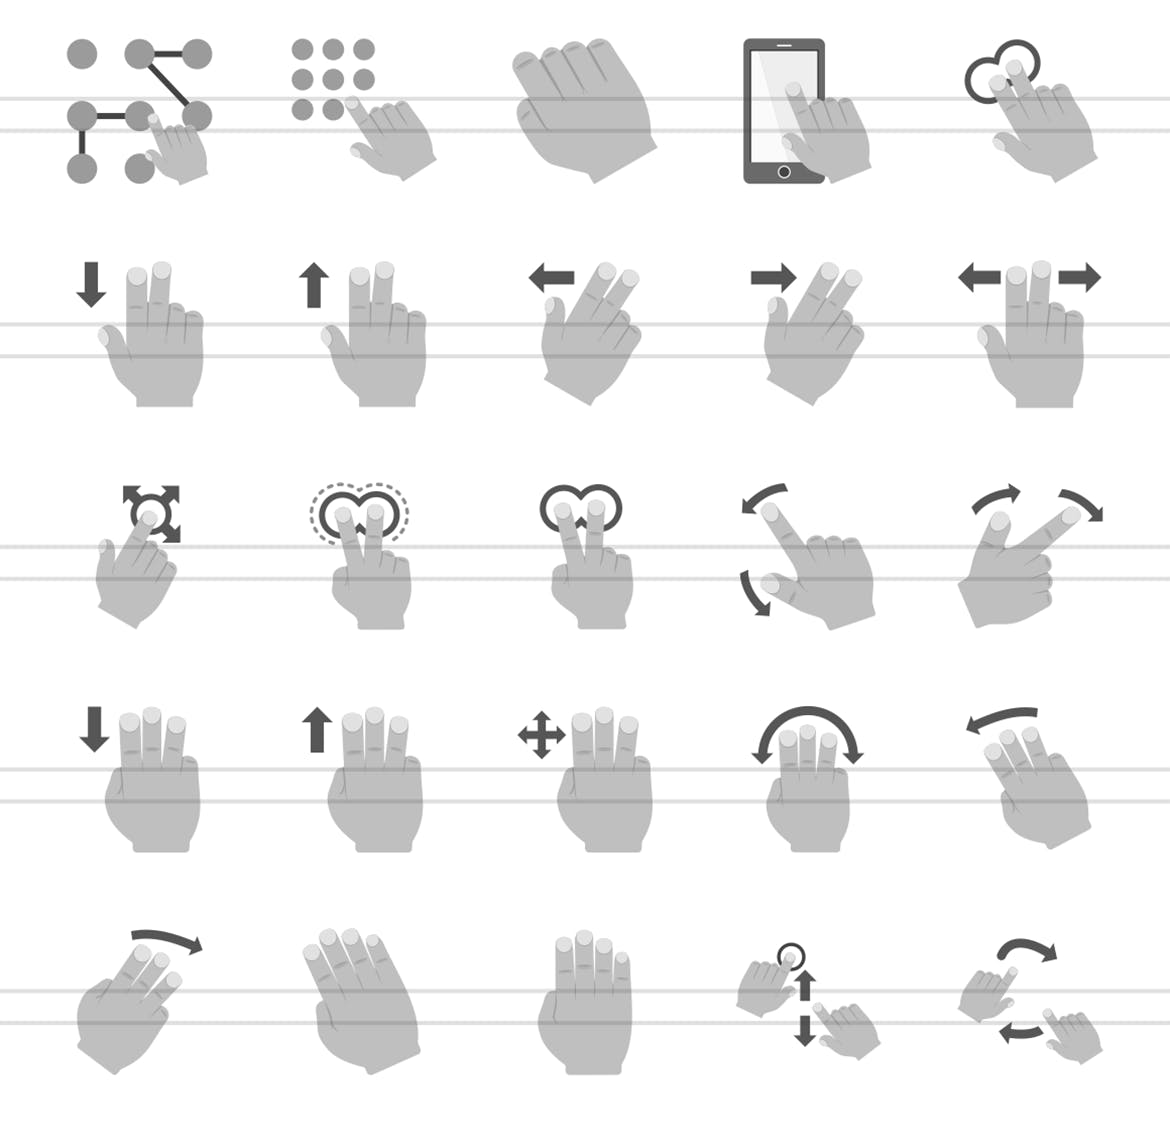 50枚手机触摸手势动作图标素材 50 Touch Gestures Greyscale Icons插图(2)